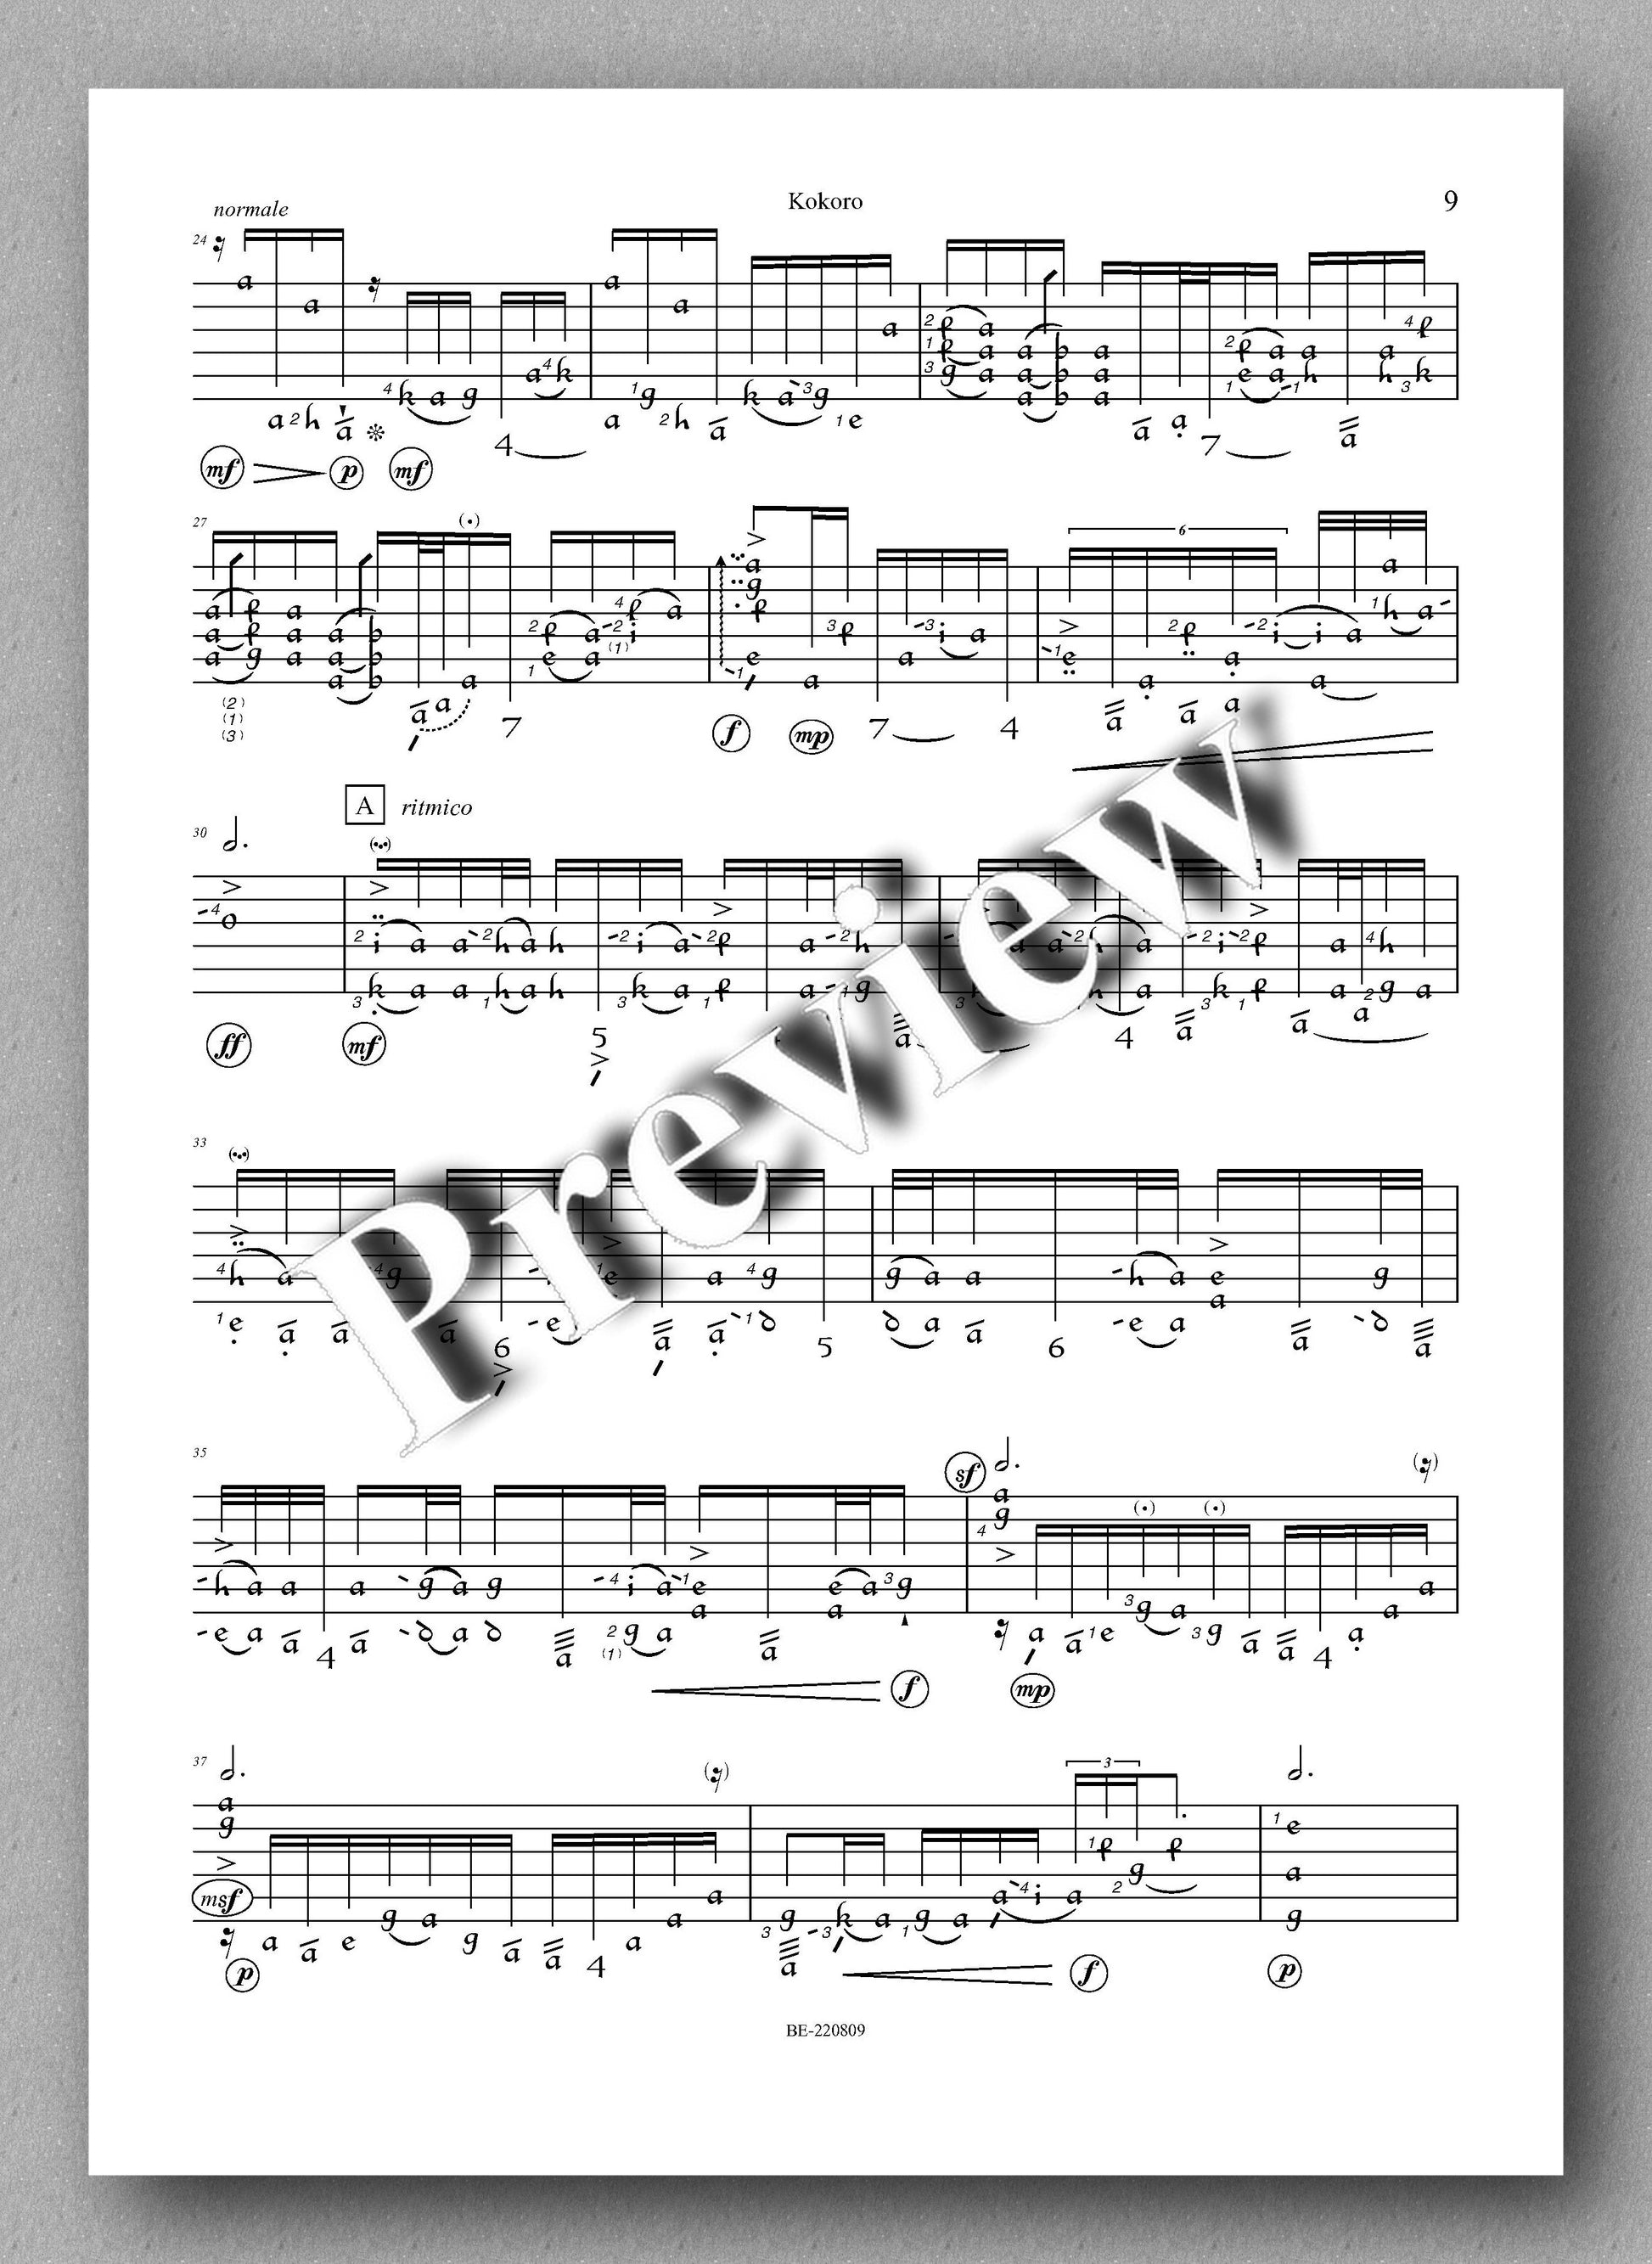 Thomas Bocklenberg, KOKORO - preview of the music notation 2